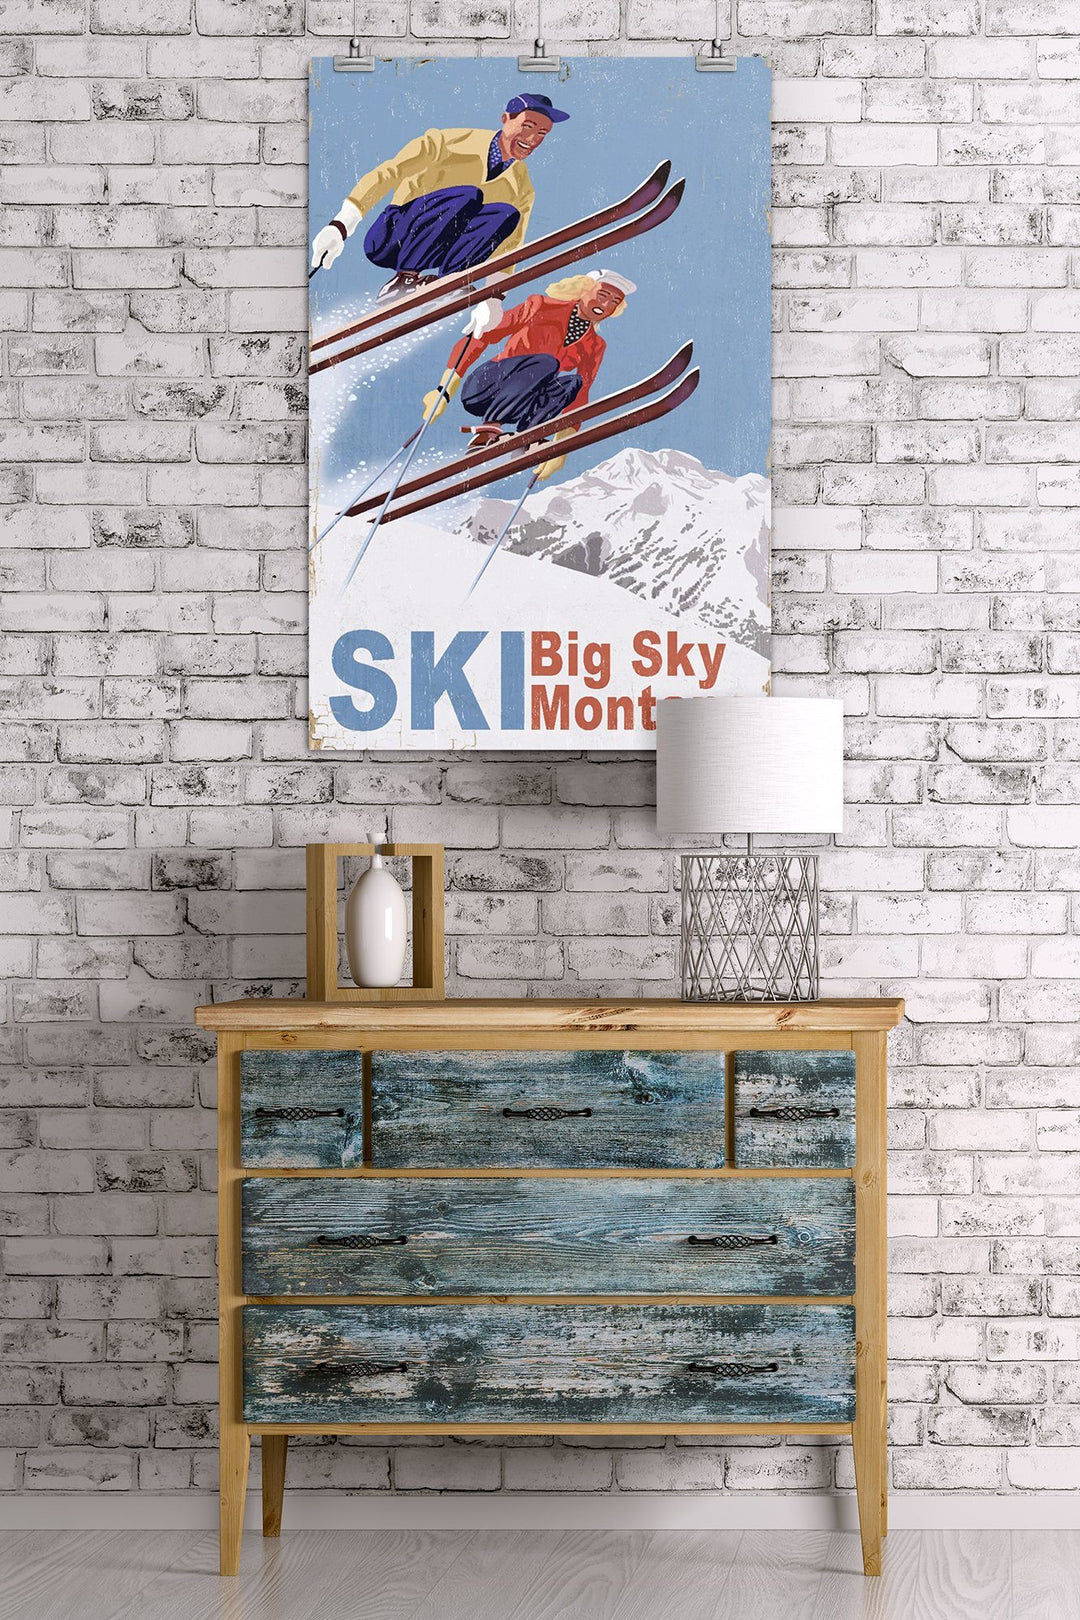 Big Sky Montana, Vintage Skiers, Art Prints and Metal Signs Art Lantern Press 